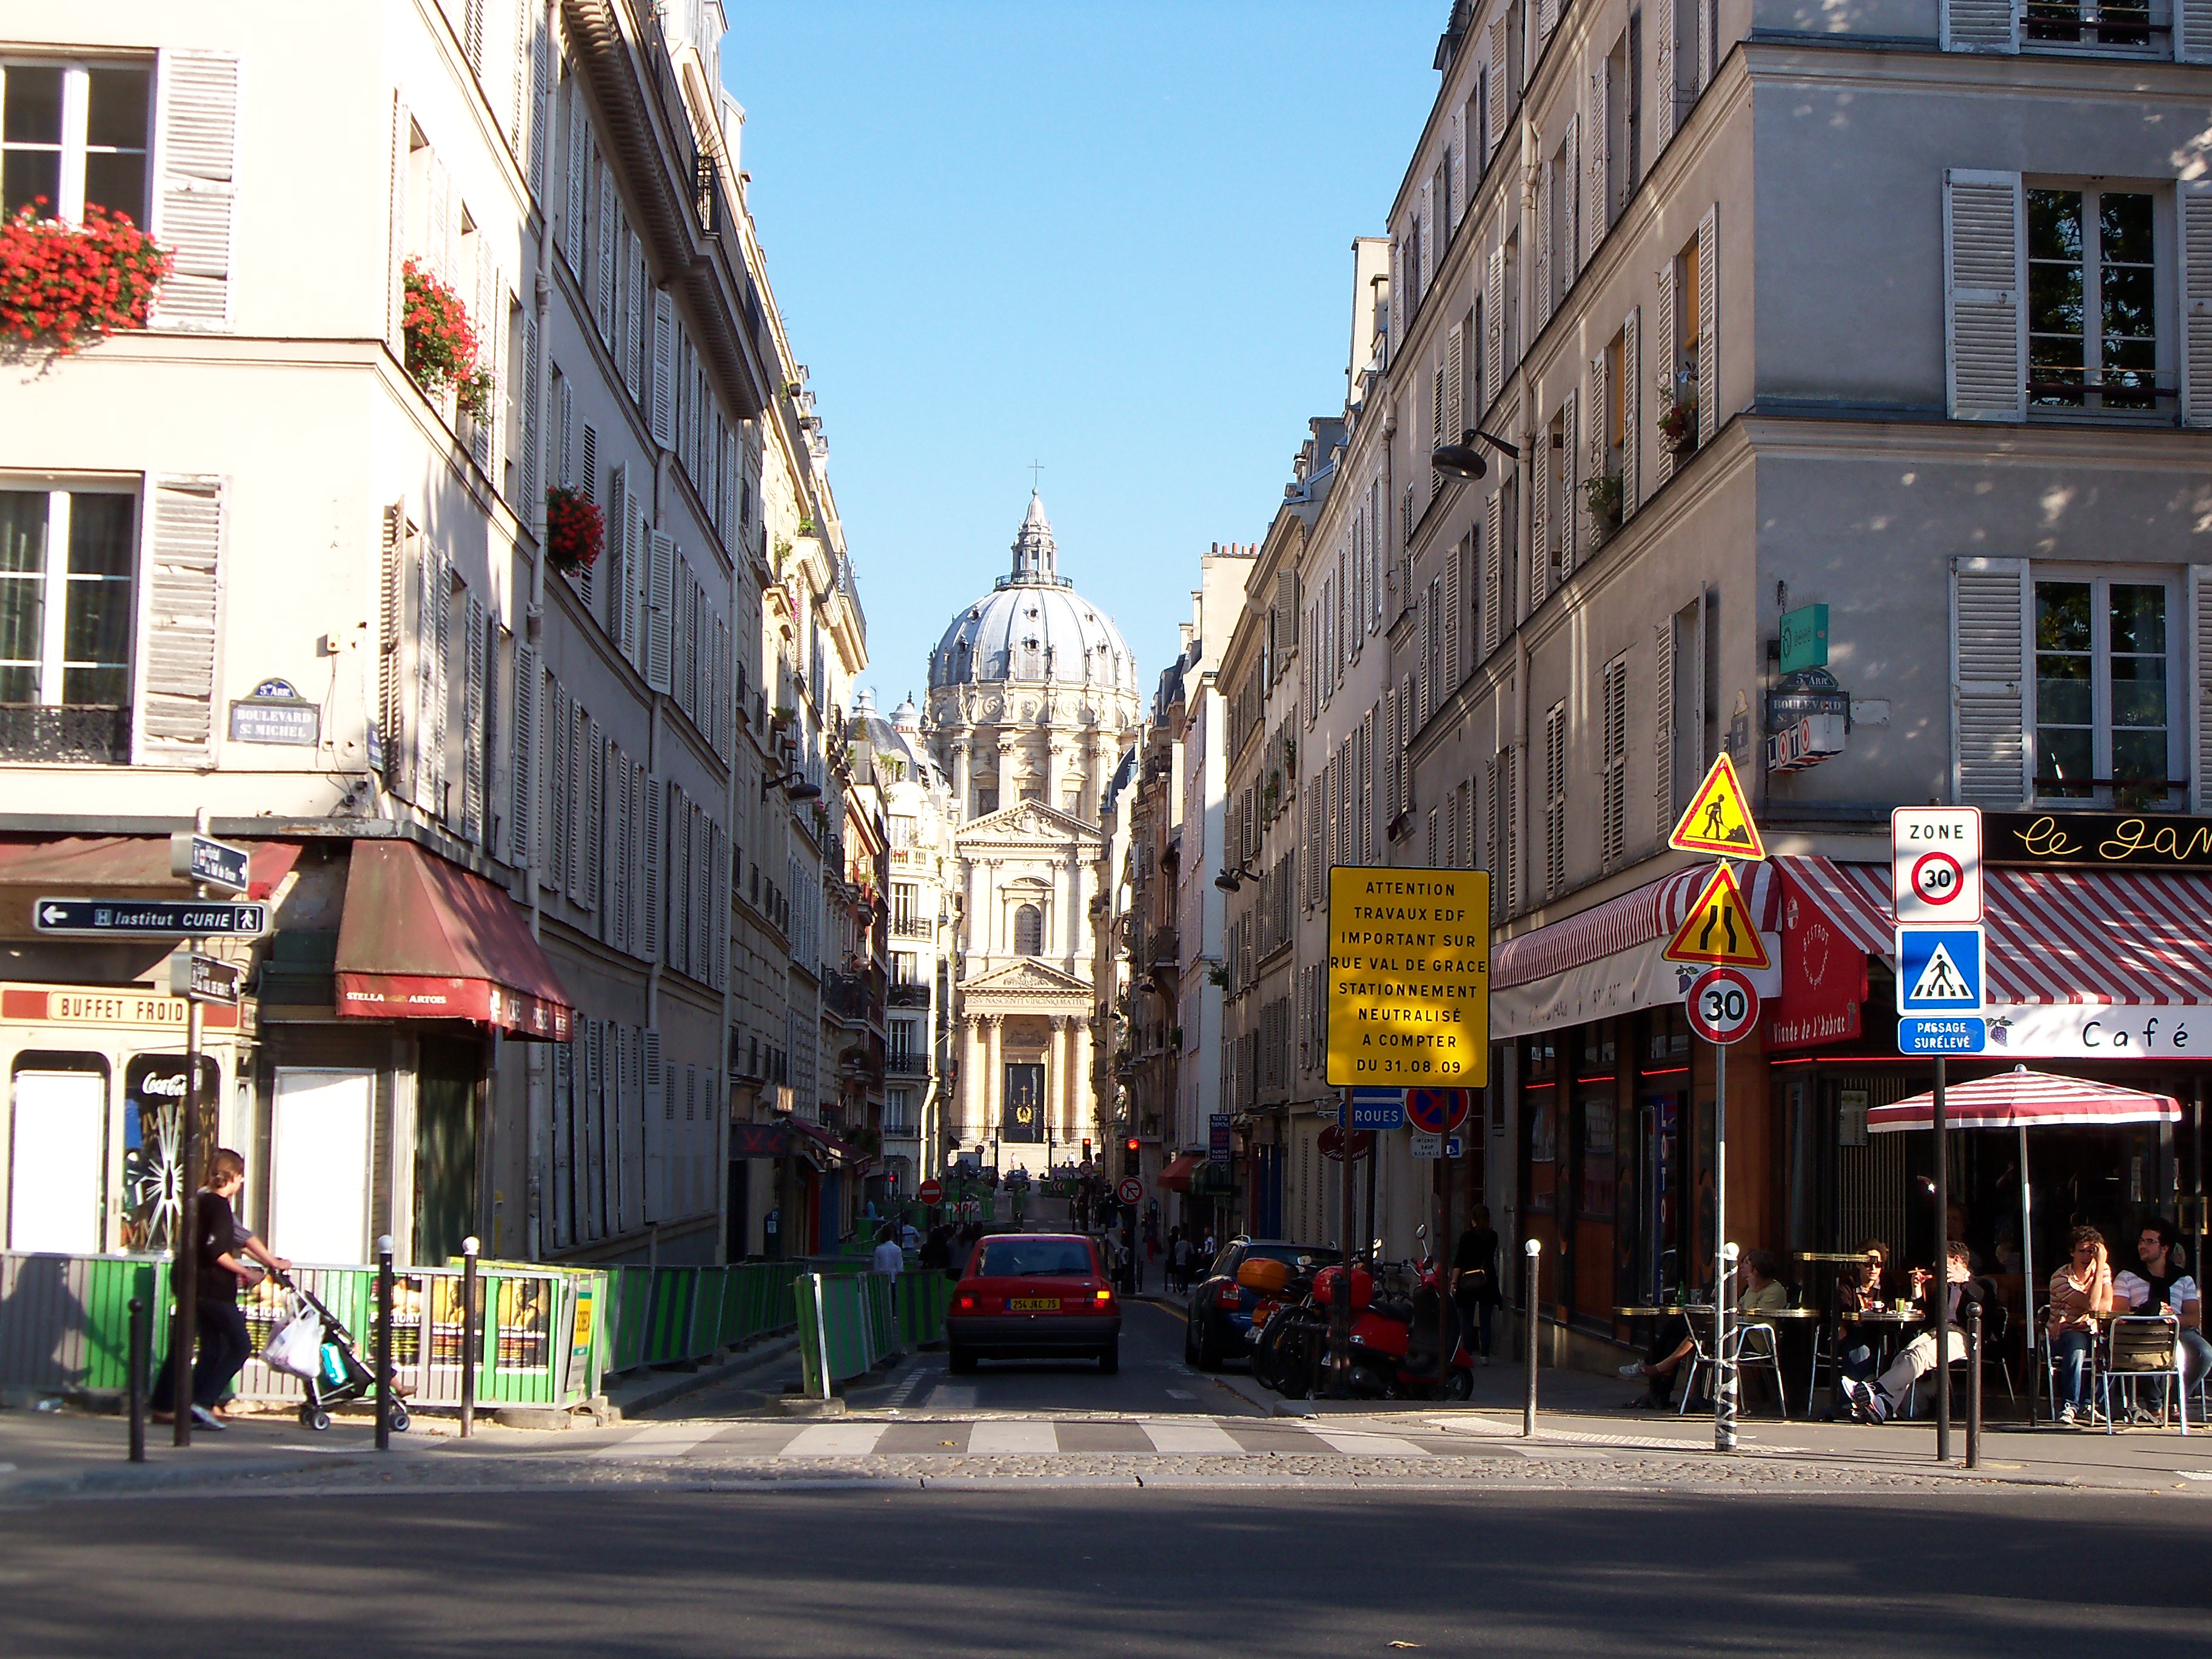 File:Mariage Frères, 90 Rue Montorgueil, 75002 Paris, 14 September 2019.jpg  - Wikimedia Commons